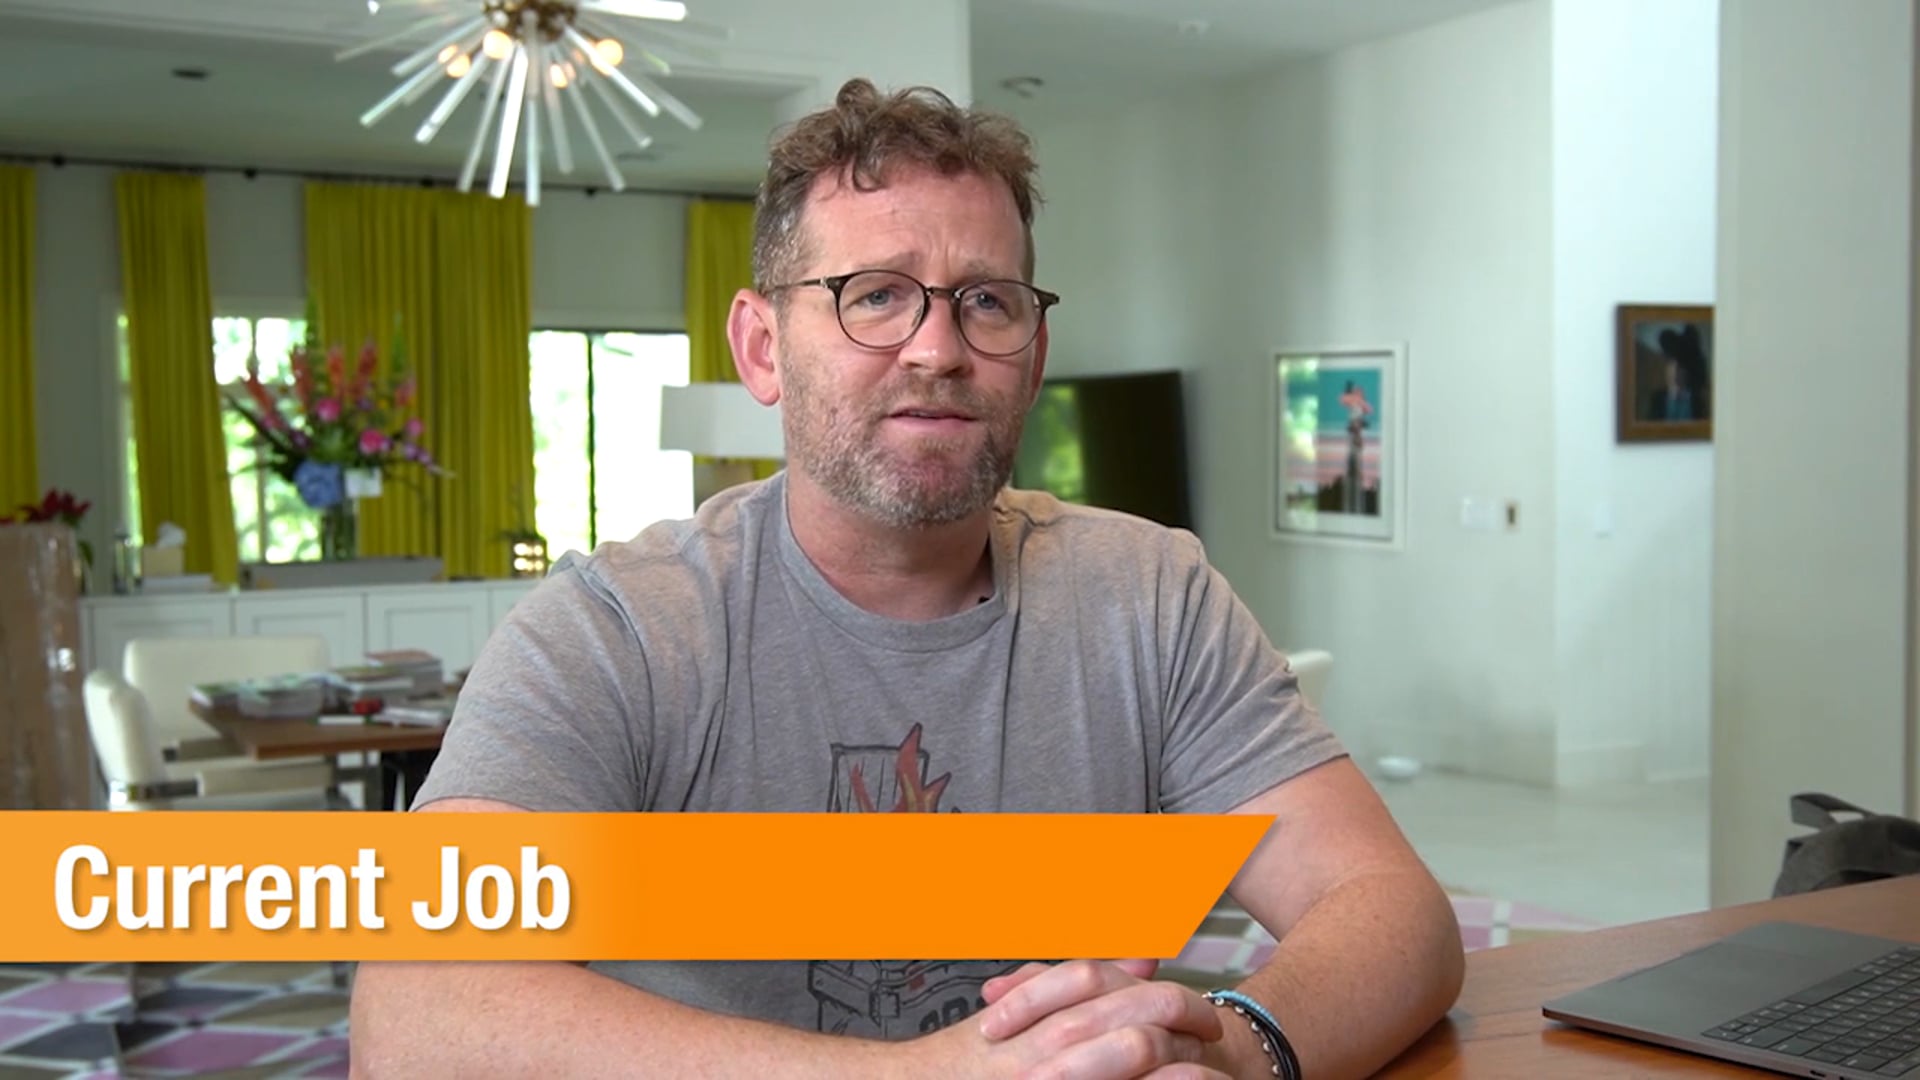 Current Job - Entrepreneur - John Resig